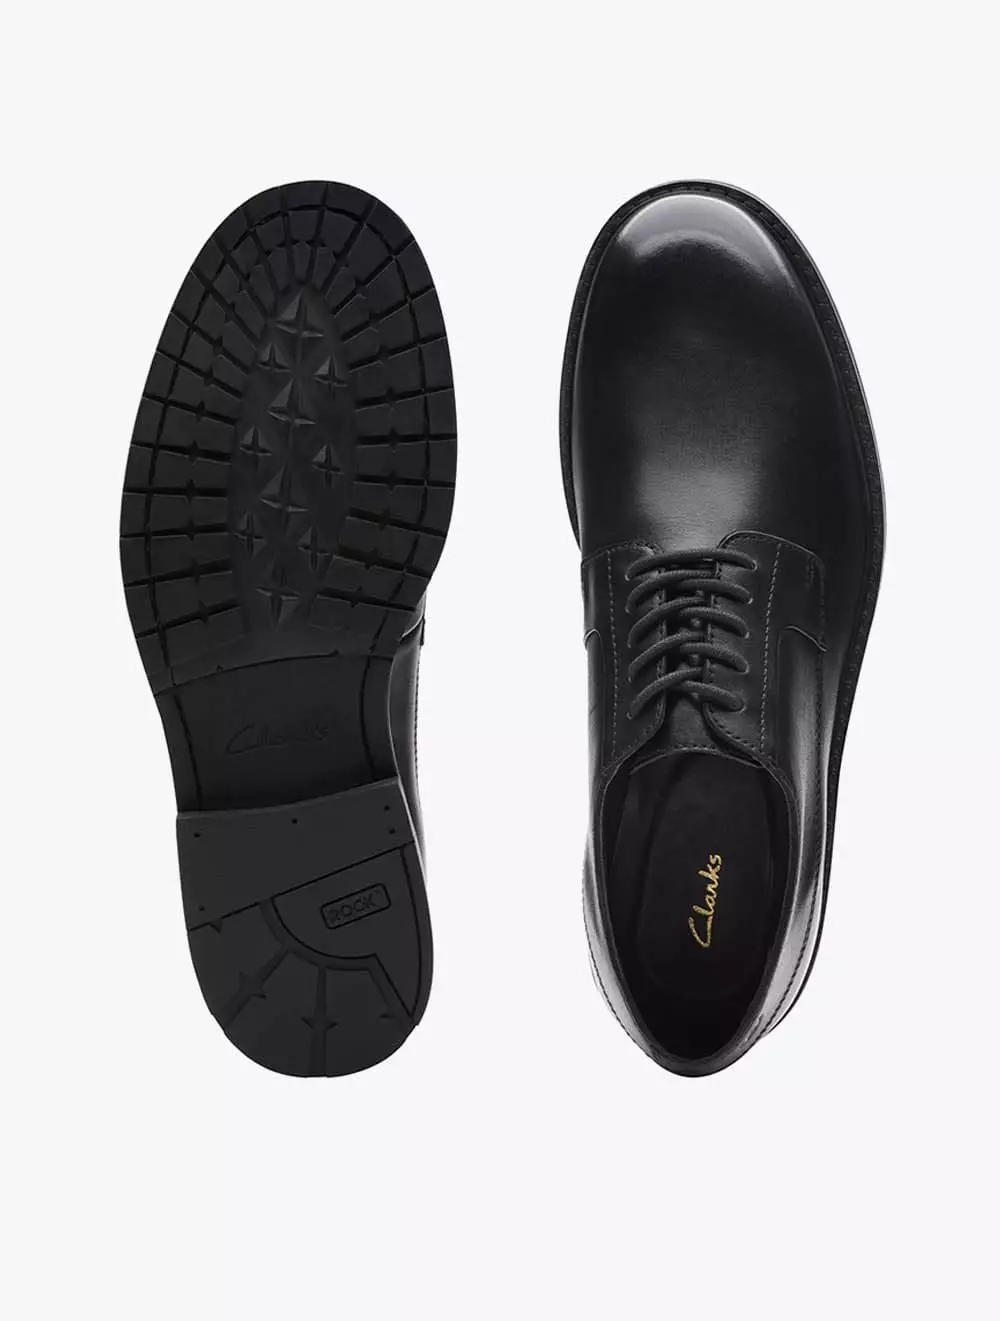 Jual Clarks Clarks CraftNorthLace Men's Shoes- Black Leather Original ...